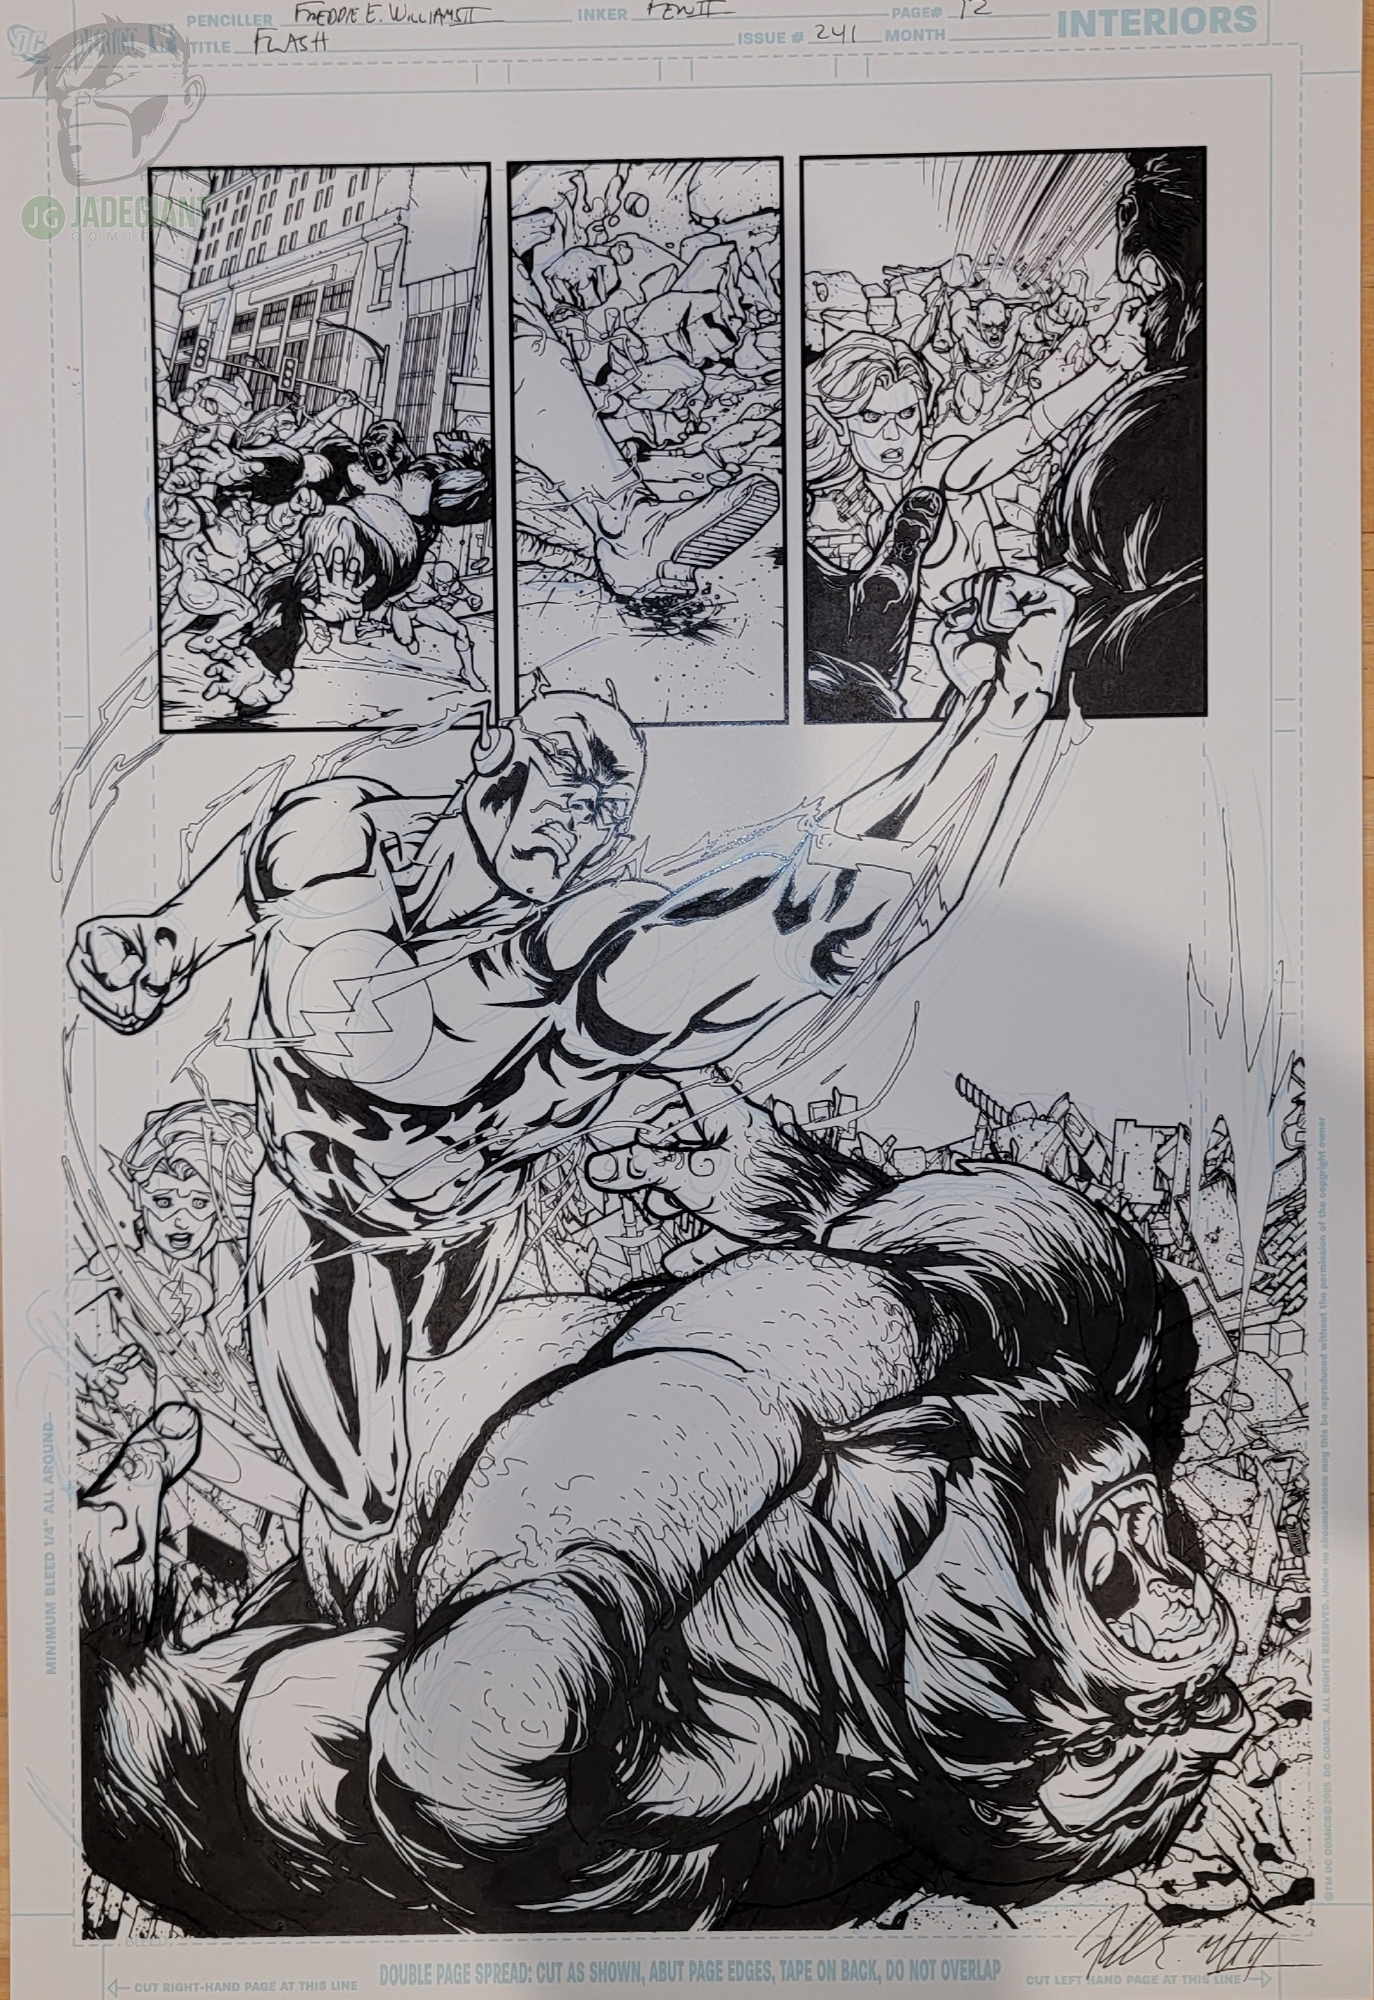 2008 The Flash Vol 2 issue 241 page 12 by Freddie Williams Gorilla Grodd! Comic Art